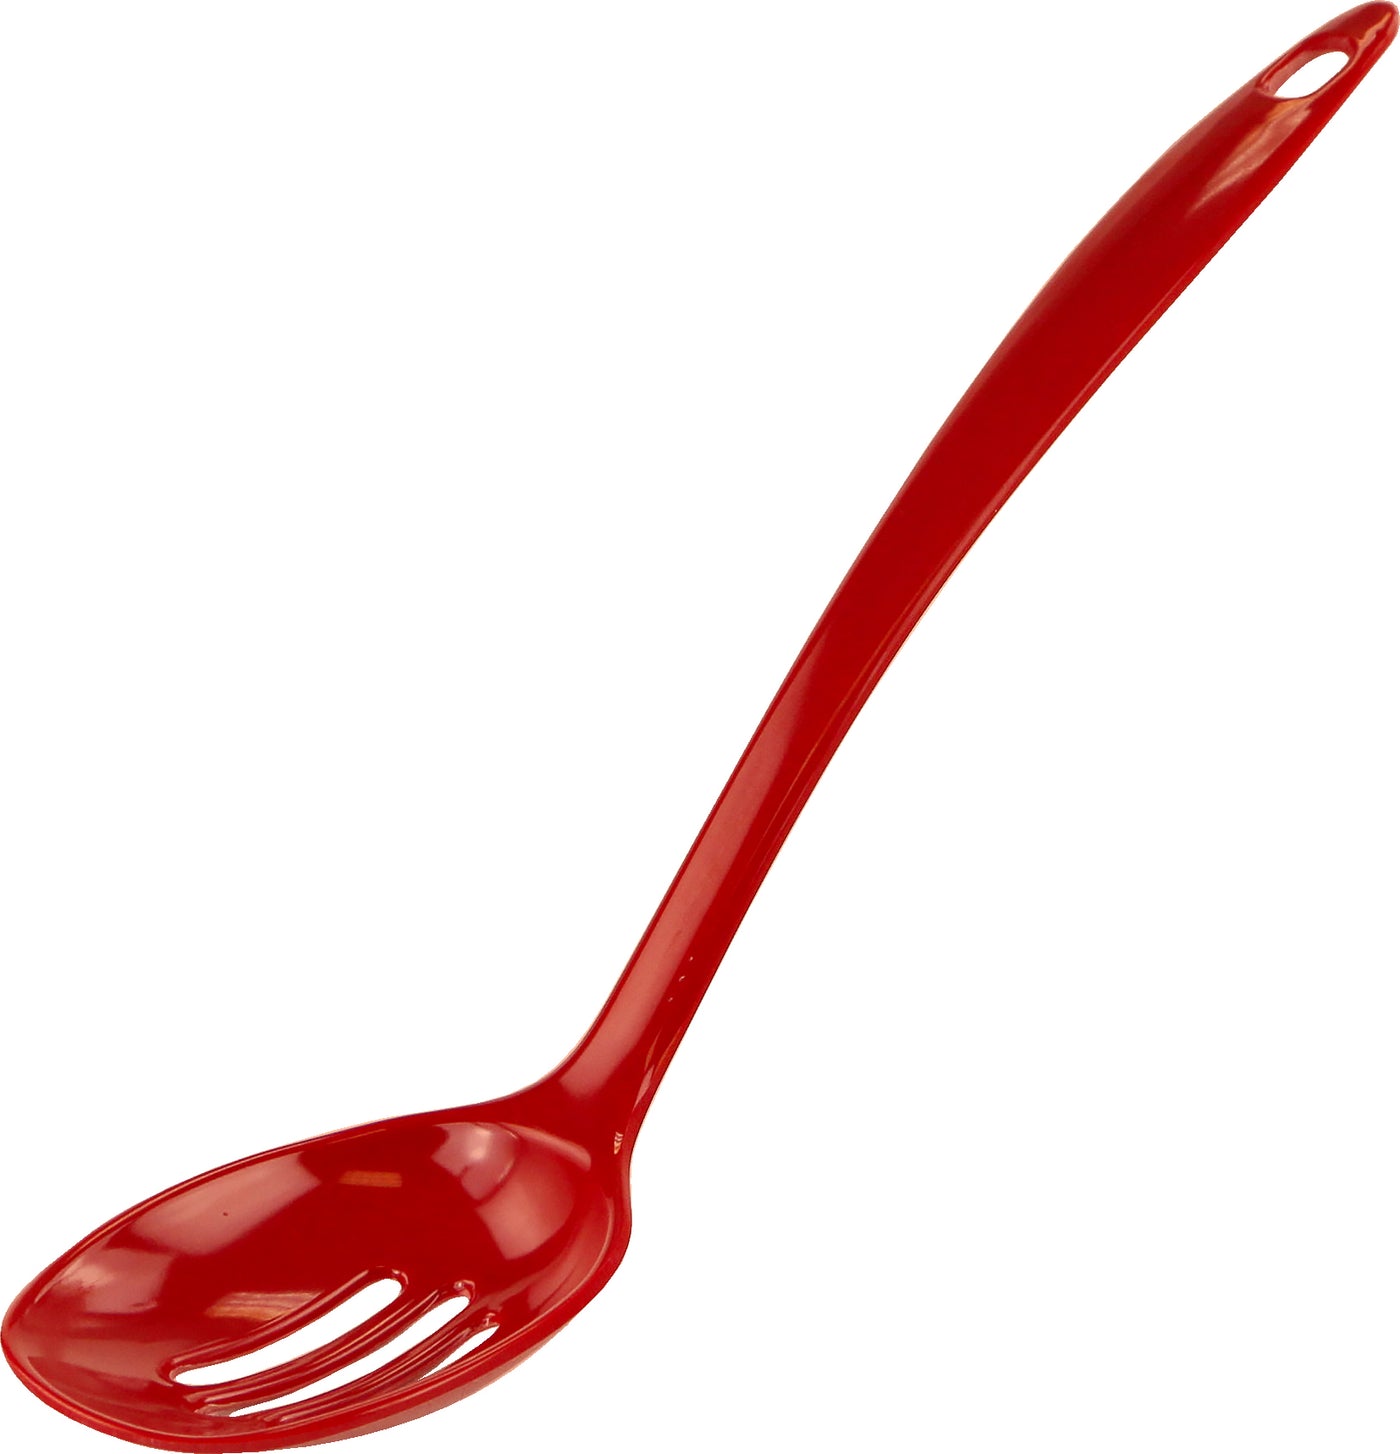 Reston Lloyd 98360 Melamine Slotted Spoon Red